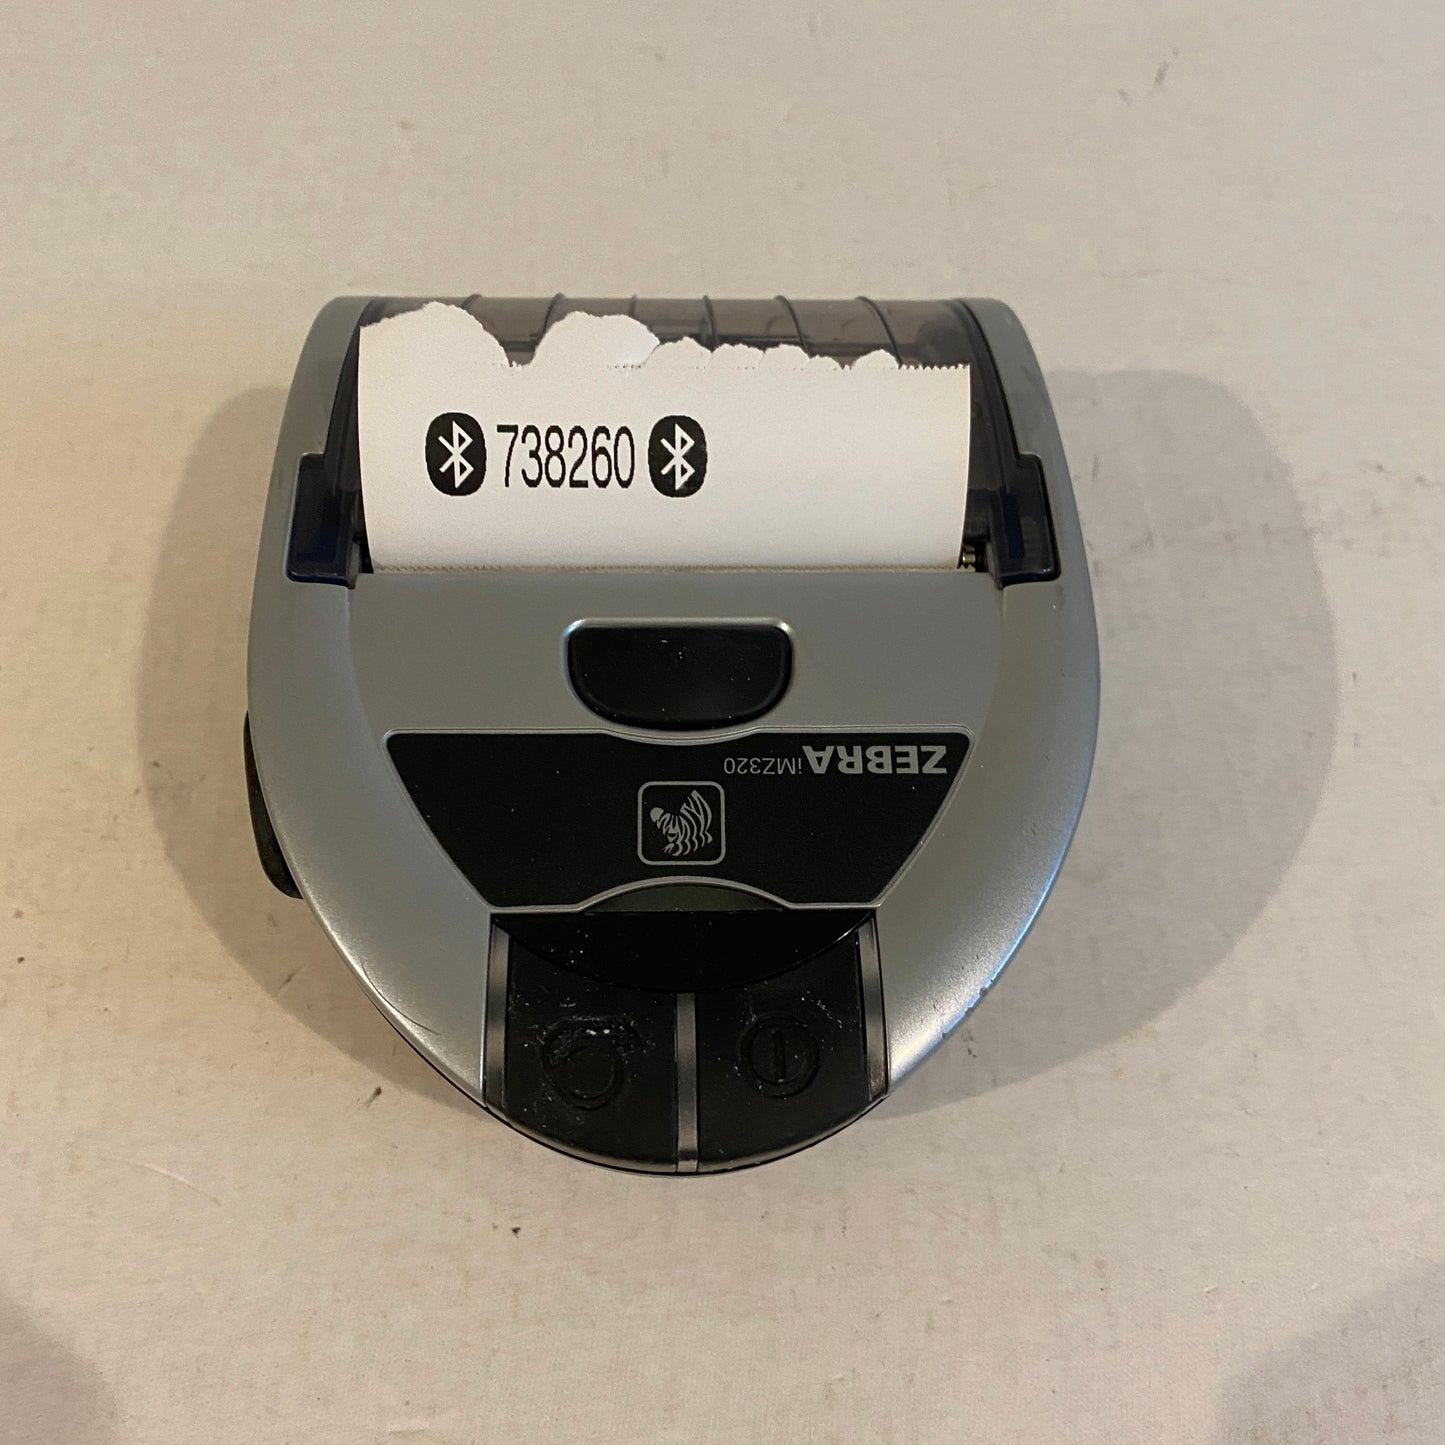 Zebra iMZ320 Mobile Wireless Bluetooth Thermal Printer - 506 batt cycles